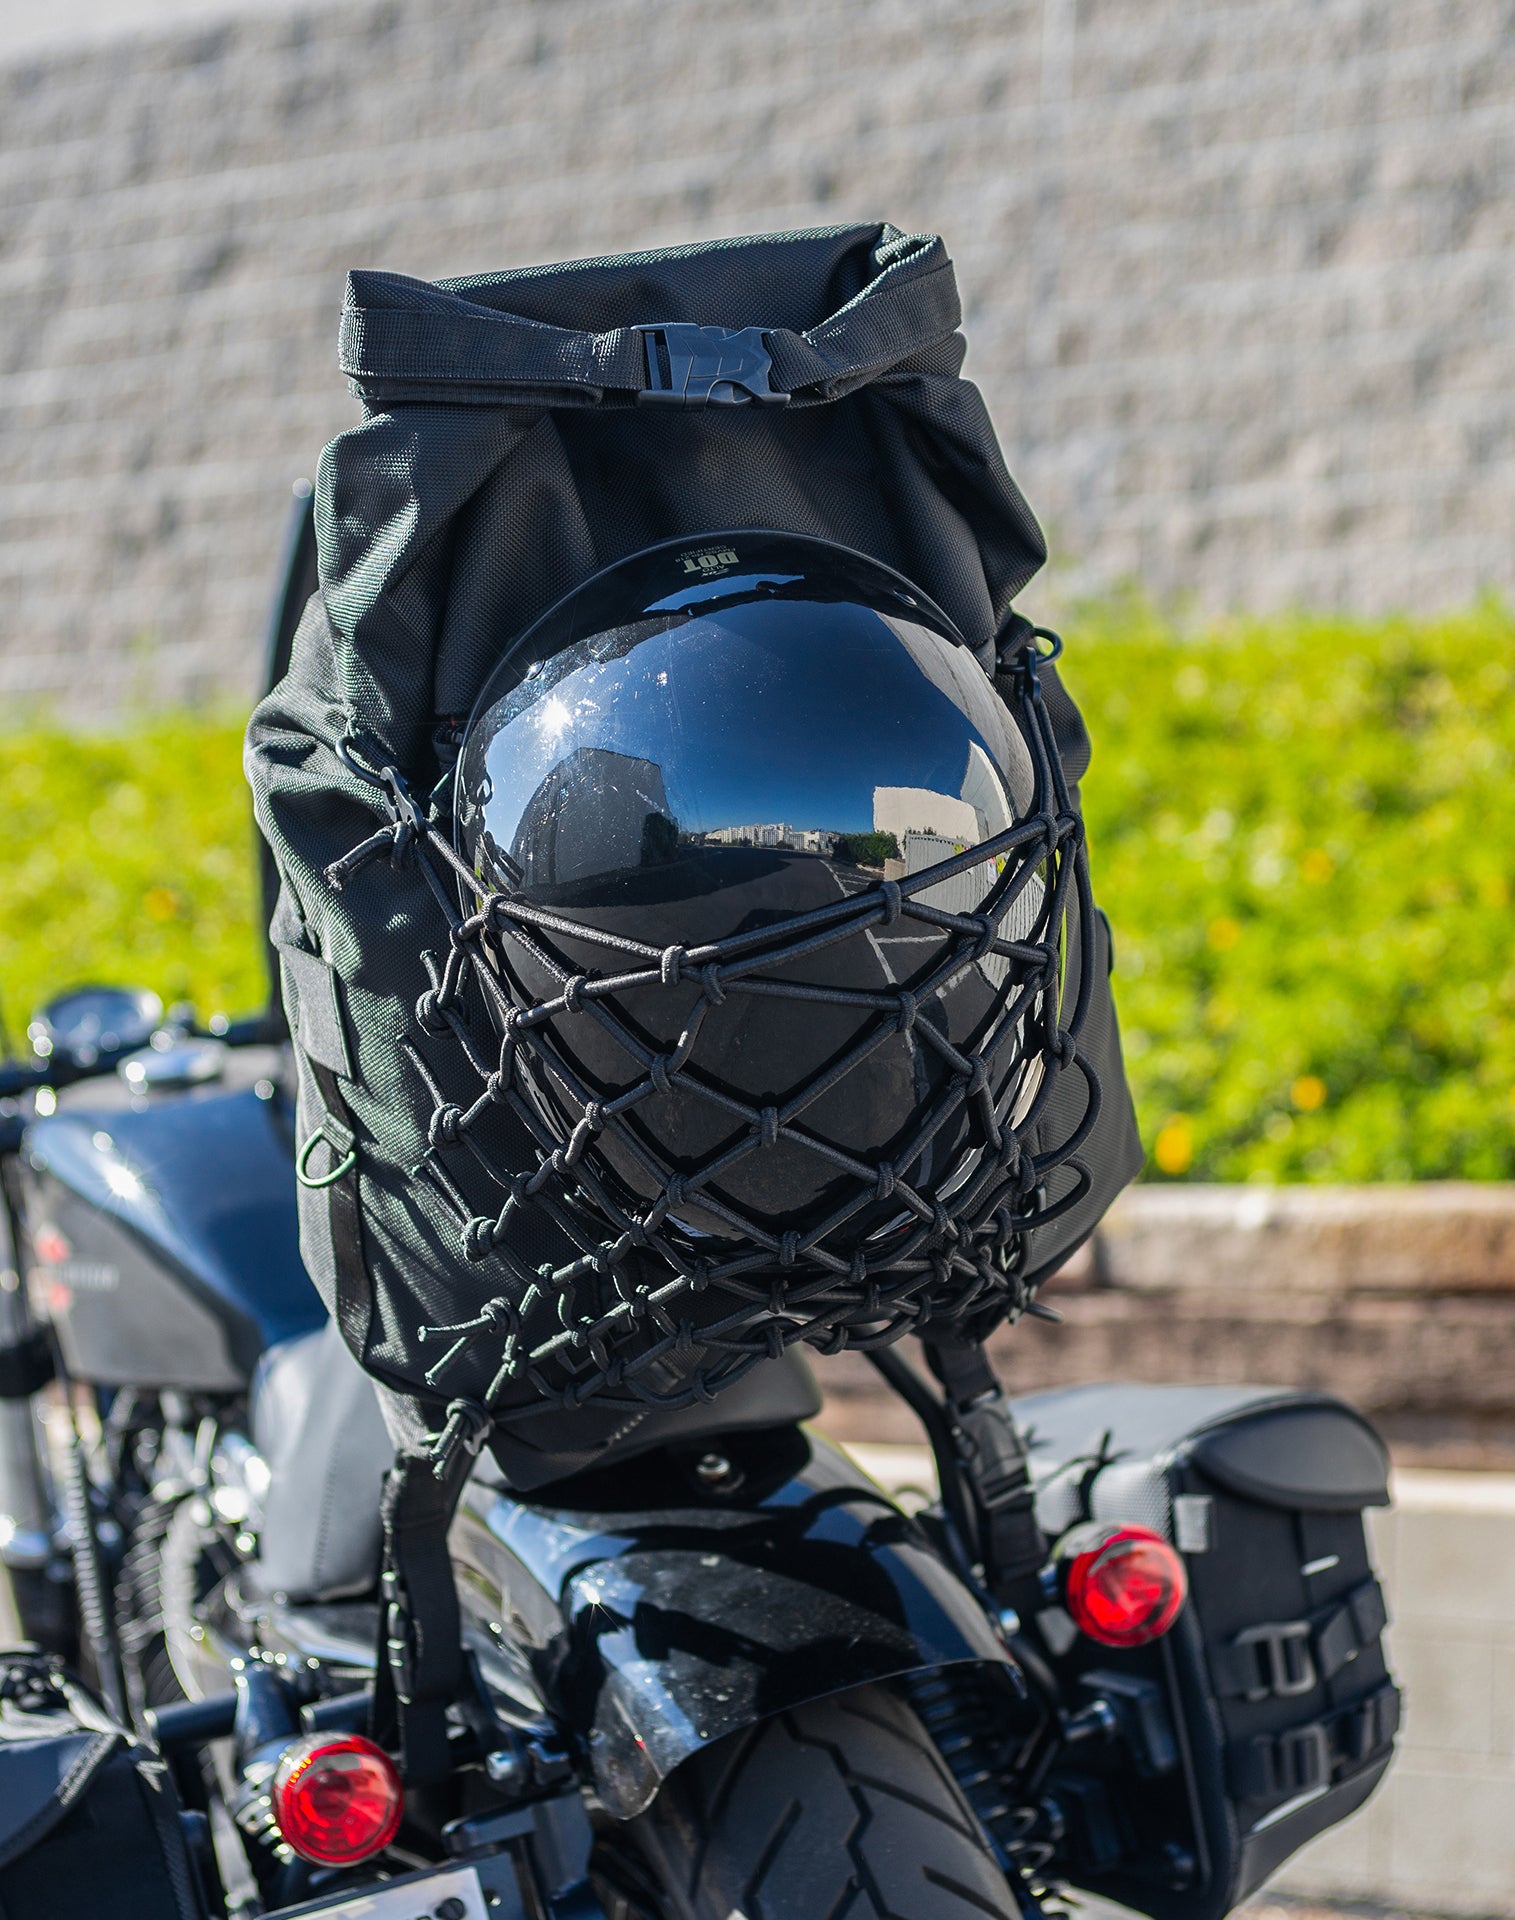 32L - Vanguard Large Dry Honda Motorcycle Tail Bag